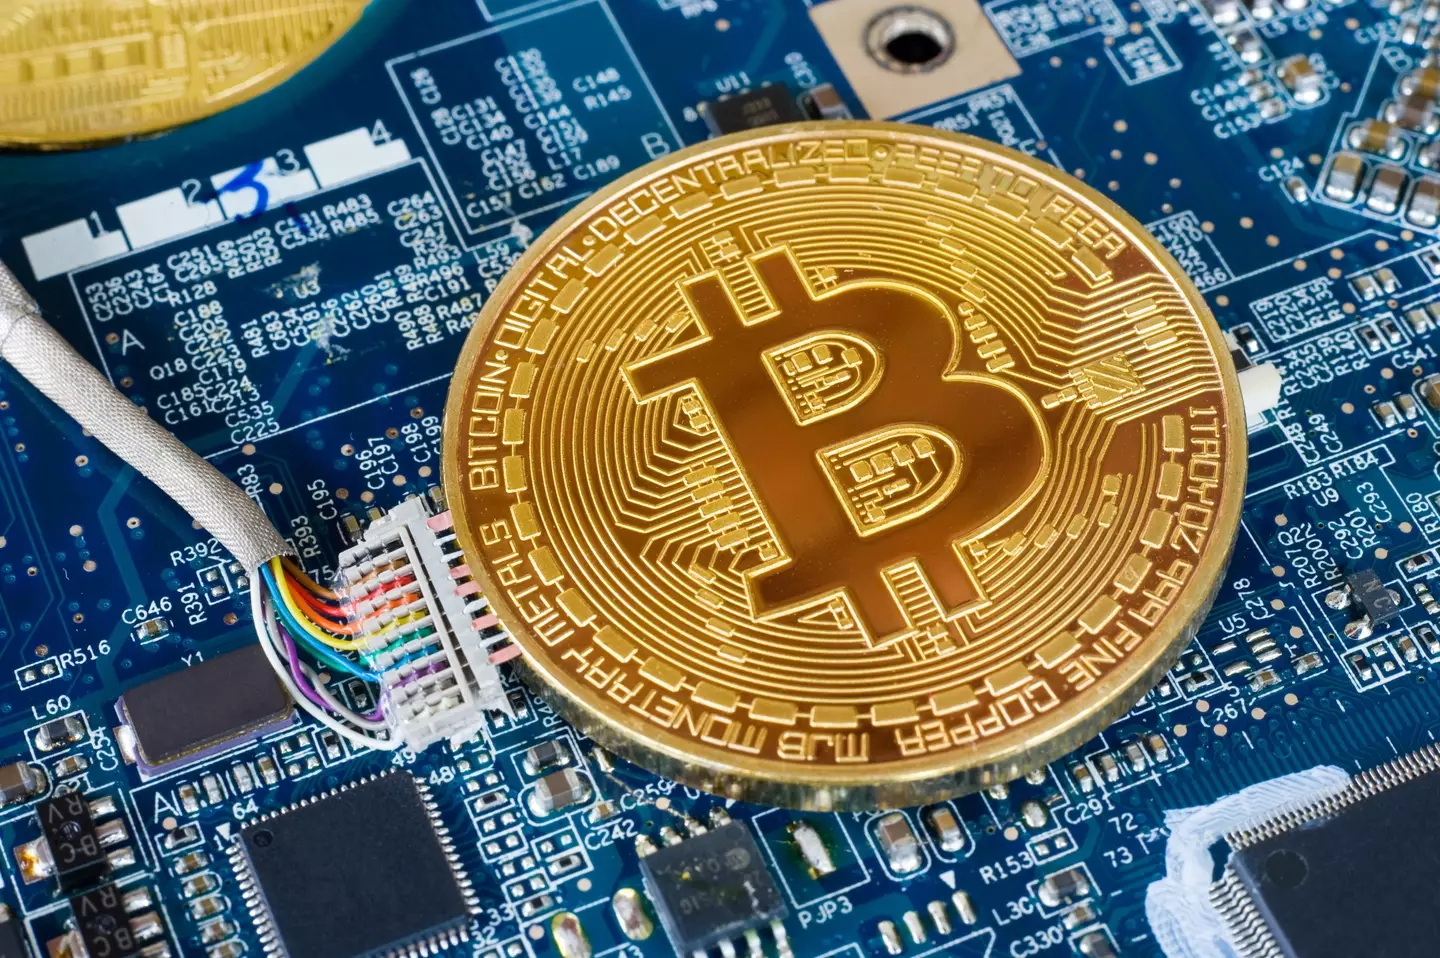 James' bitcoin is said to be worth £150 million.